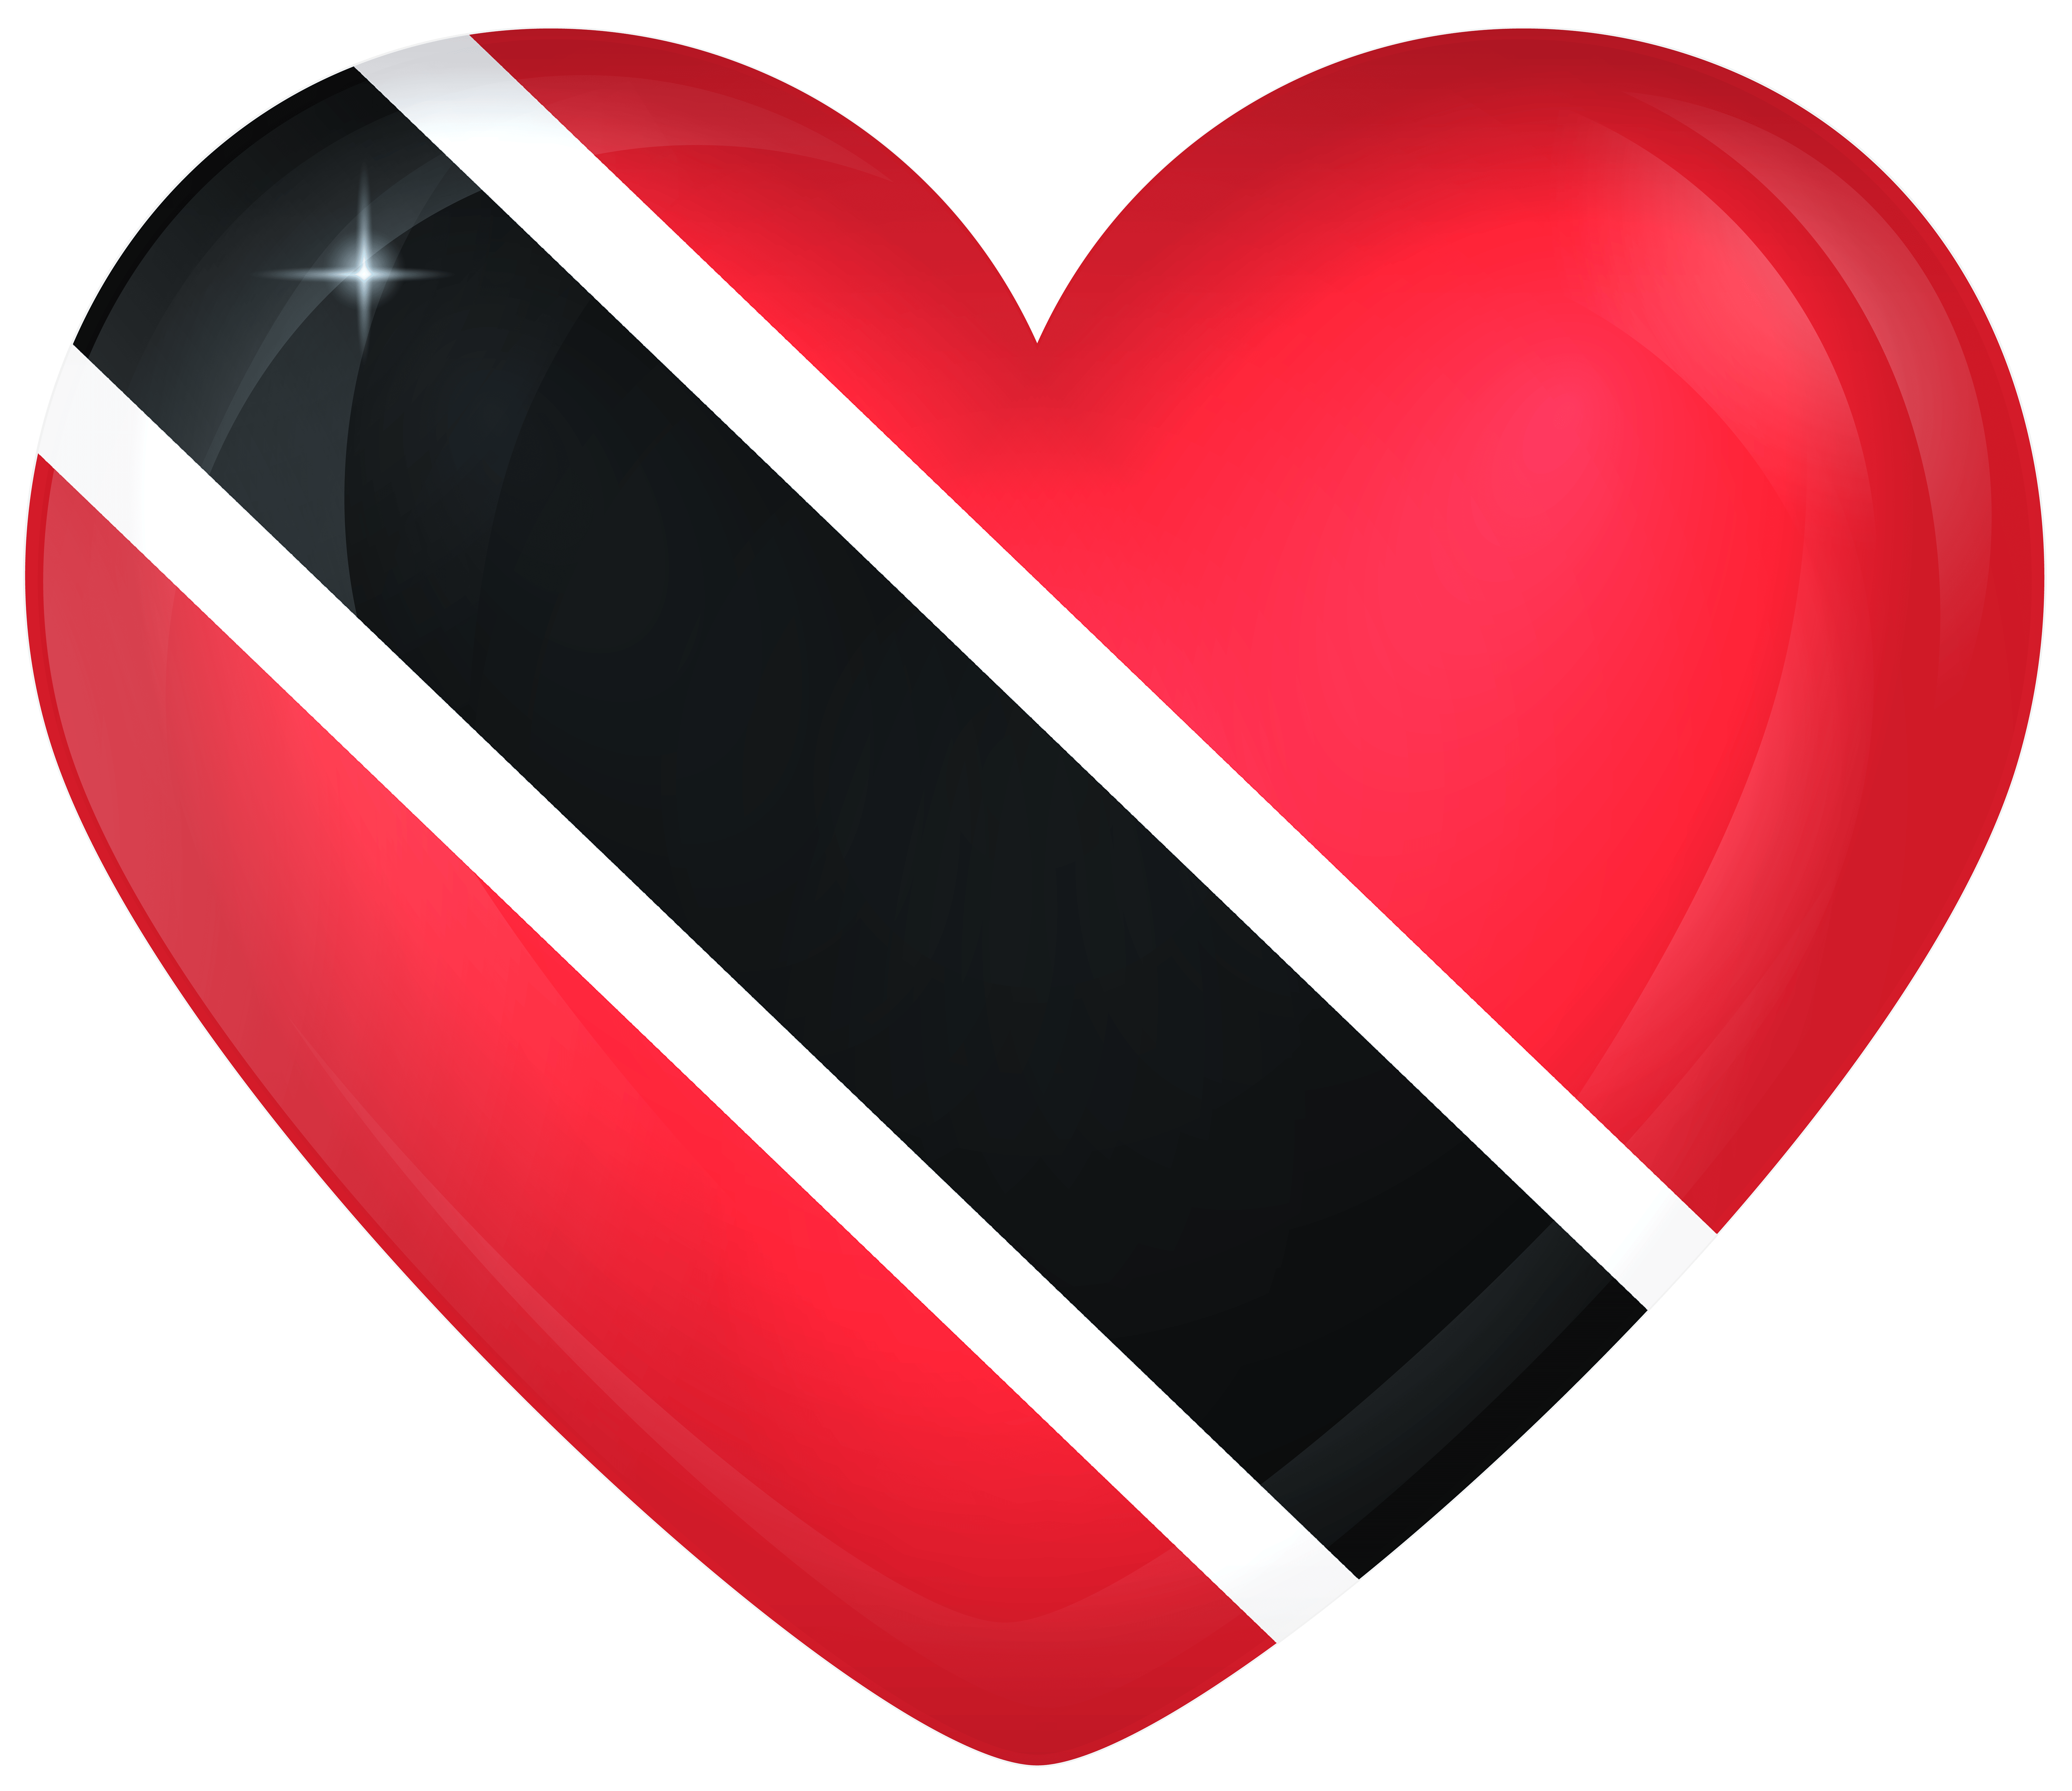 Trinidad And Tobago Flag Wallpapers Wallpaper Cave